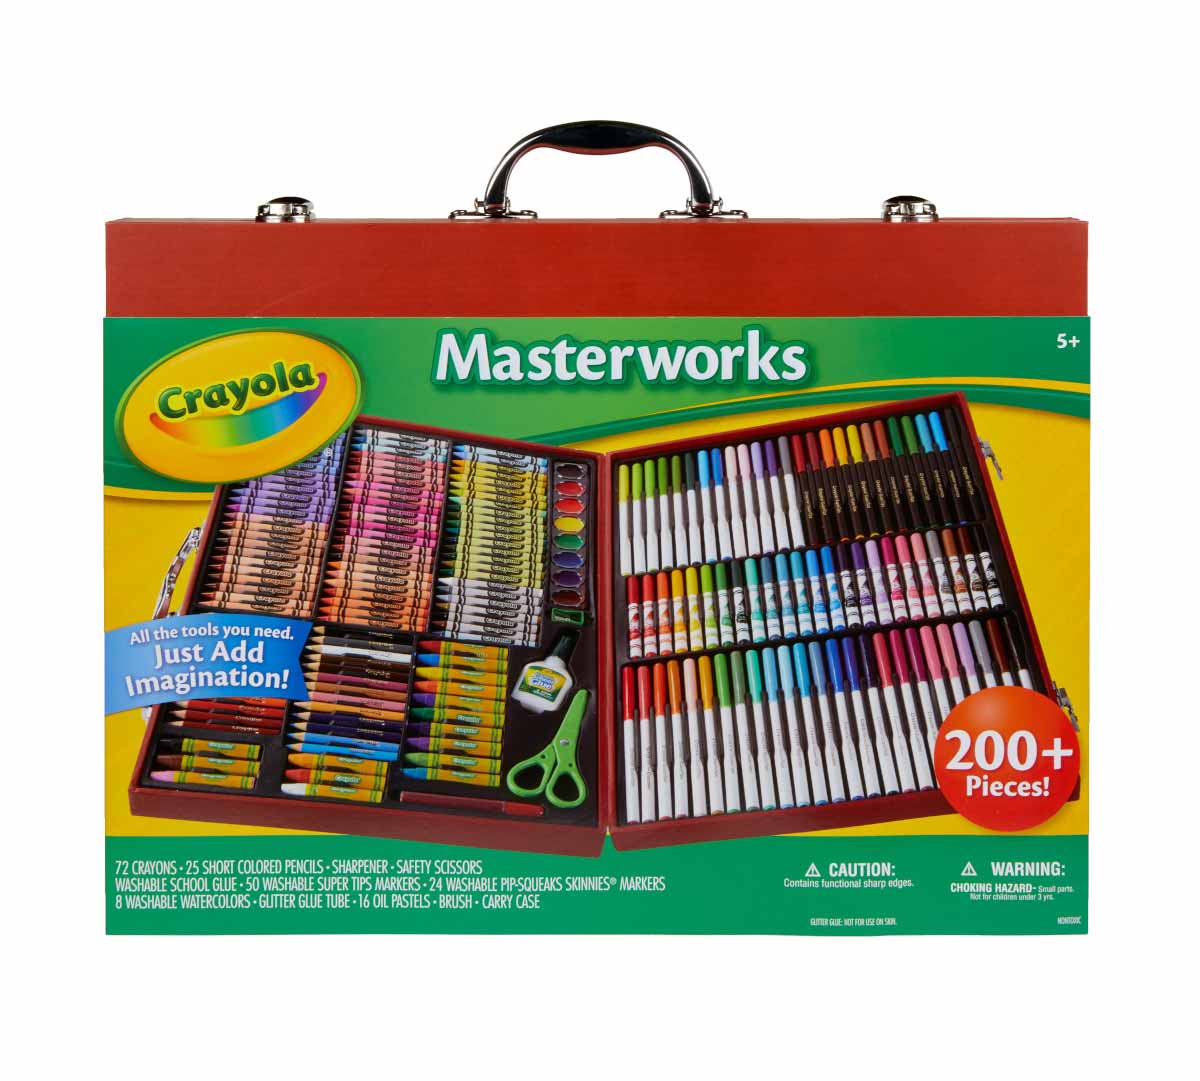 https://shop.crayola.com/on/demandware.static/-/Sites-crayola-storefront/default/dwc0674f7f/images/04-0581-A-003_Masterworks-Art-Case_F1.jpg